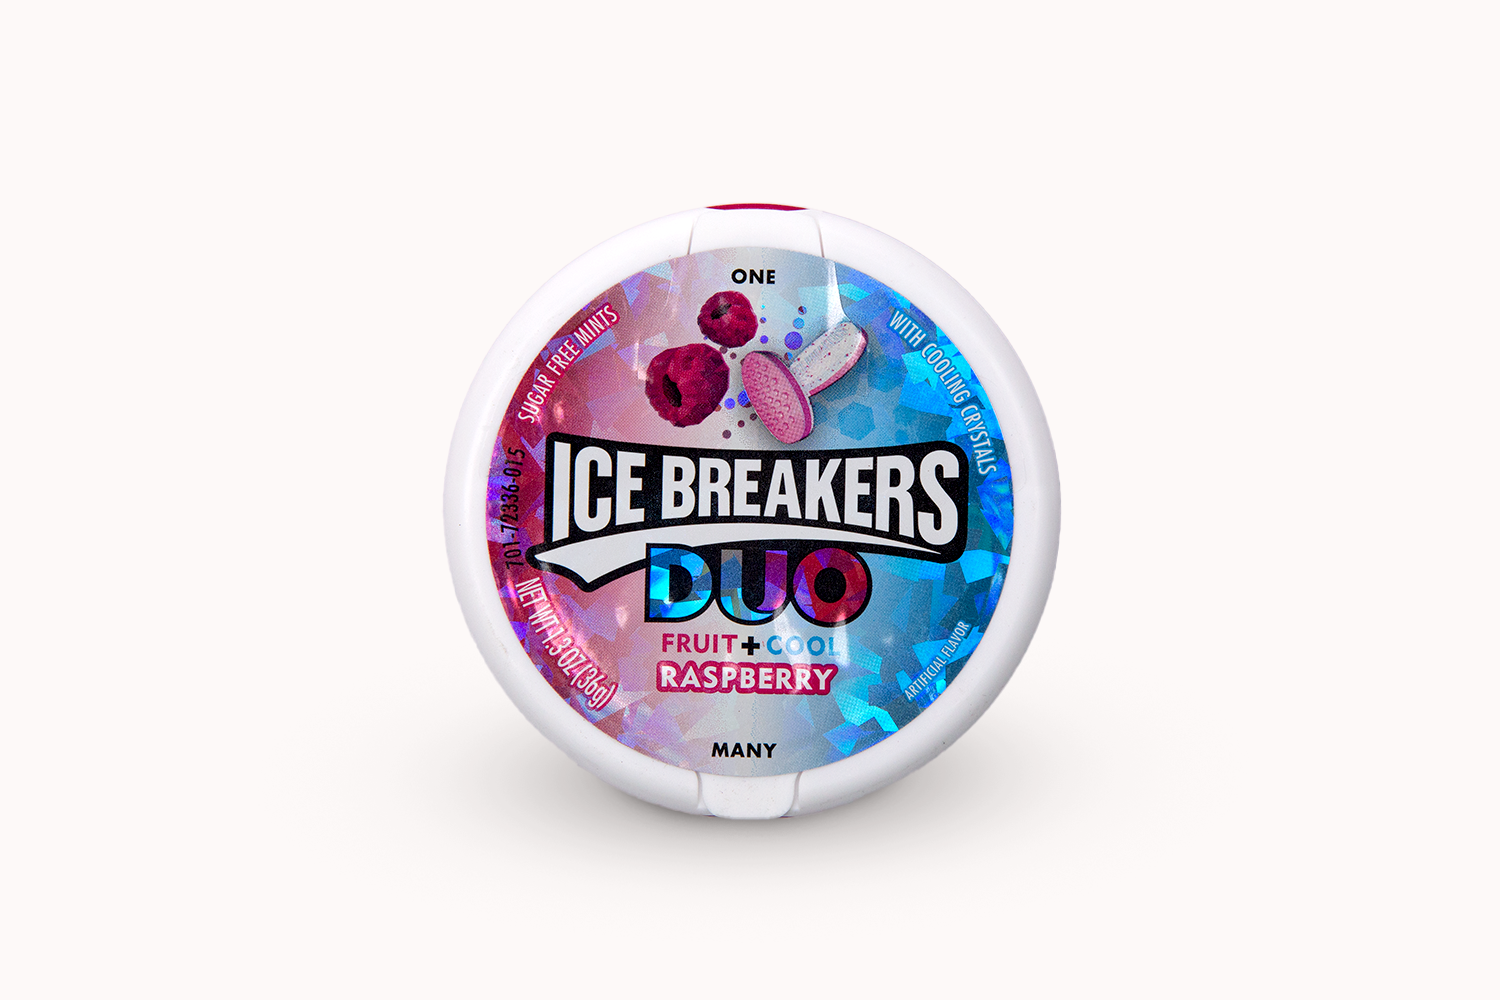 Ice Breakers Duo Fruit + Cool Mints - Raspberry